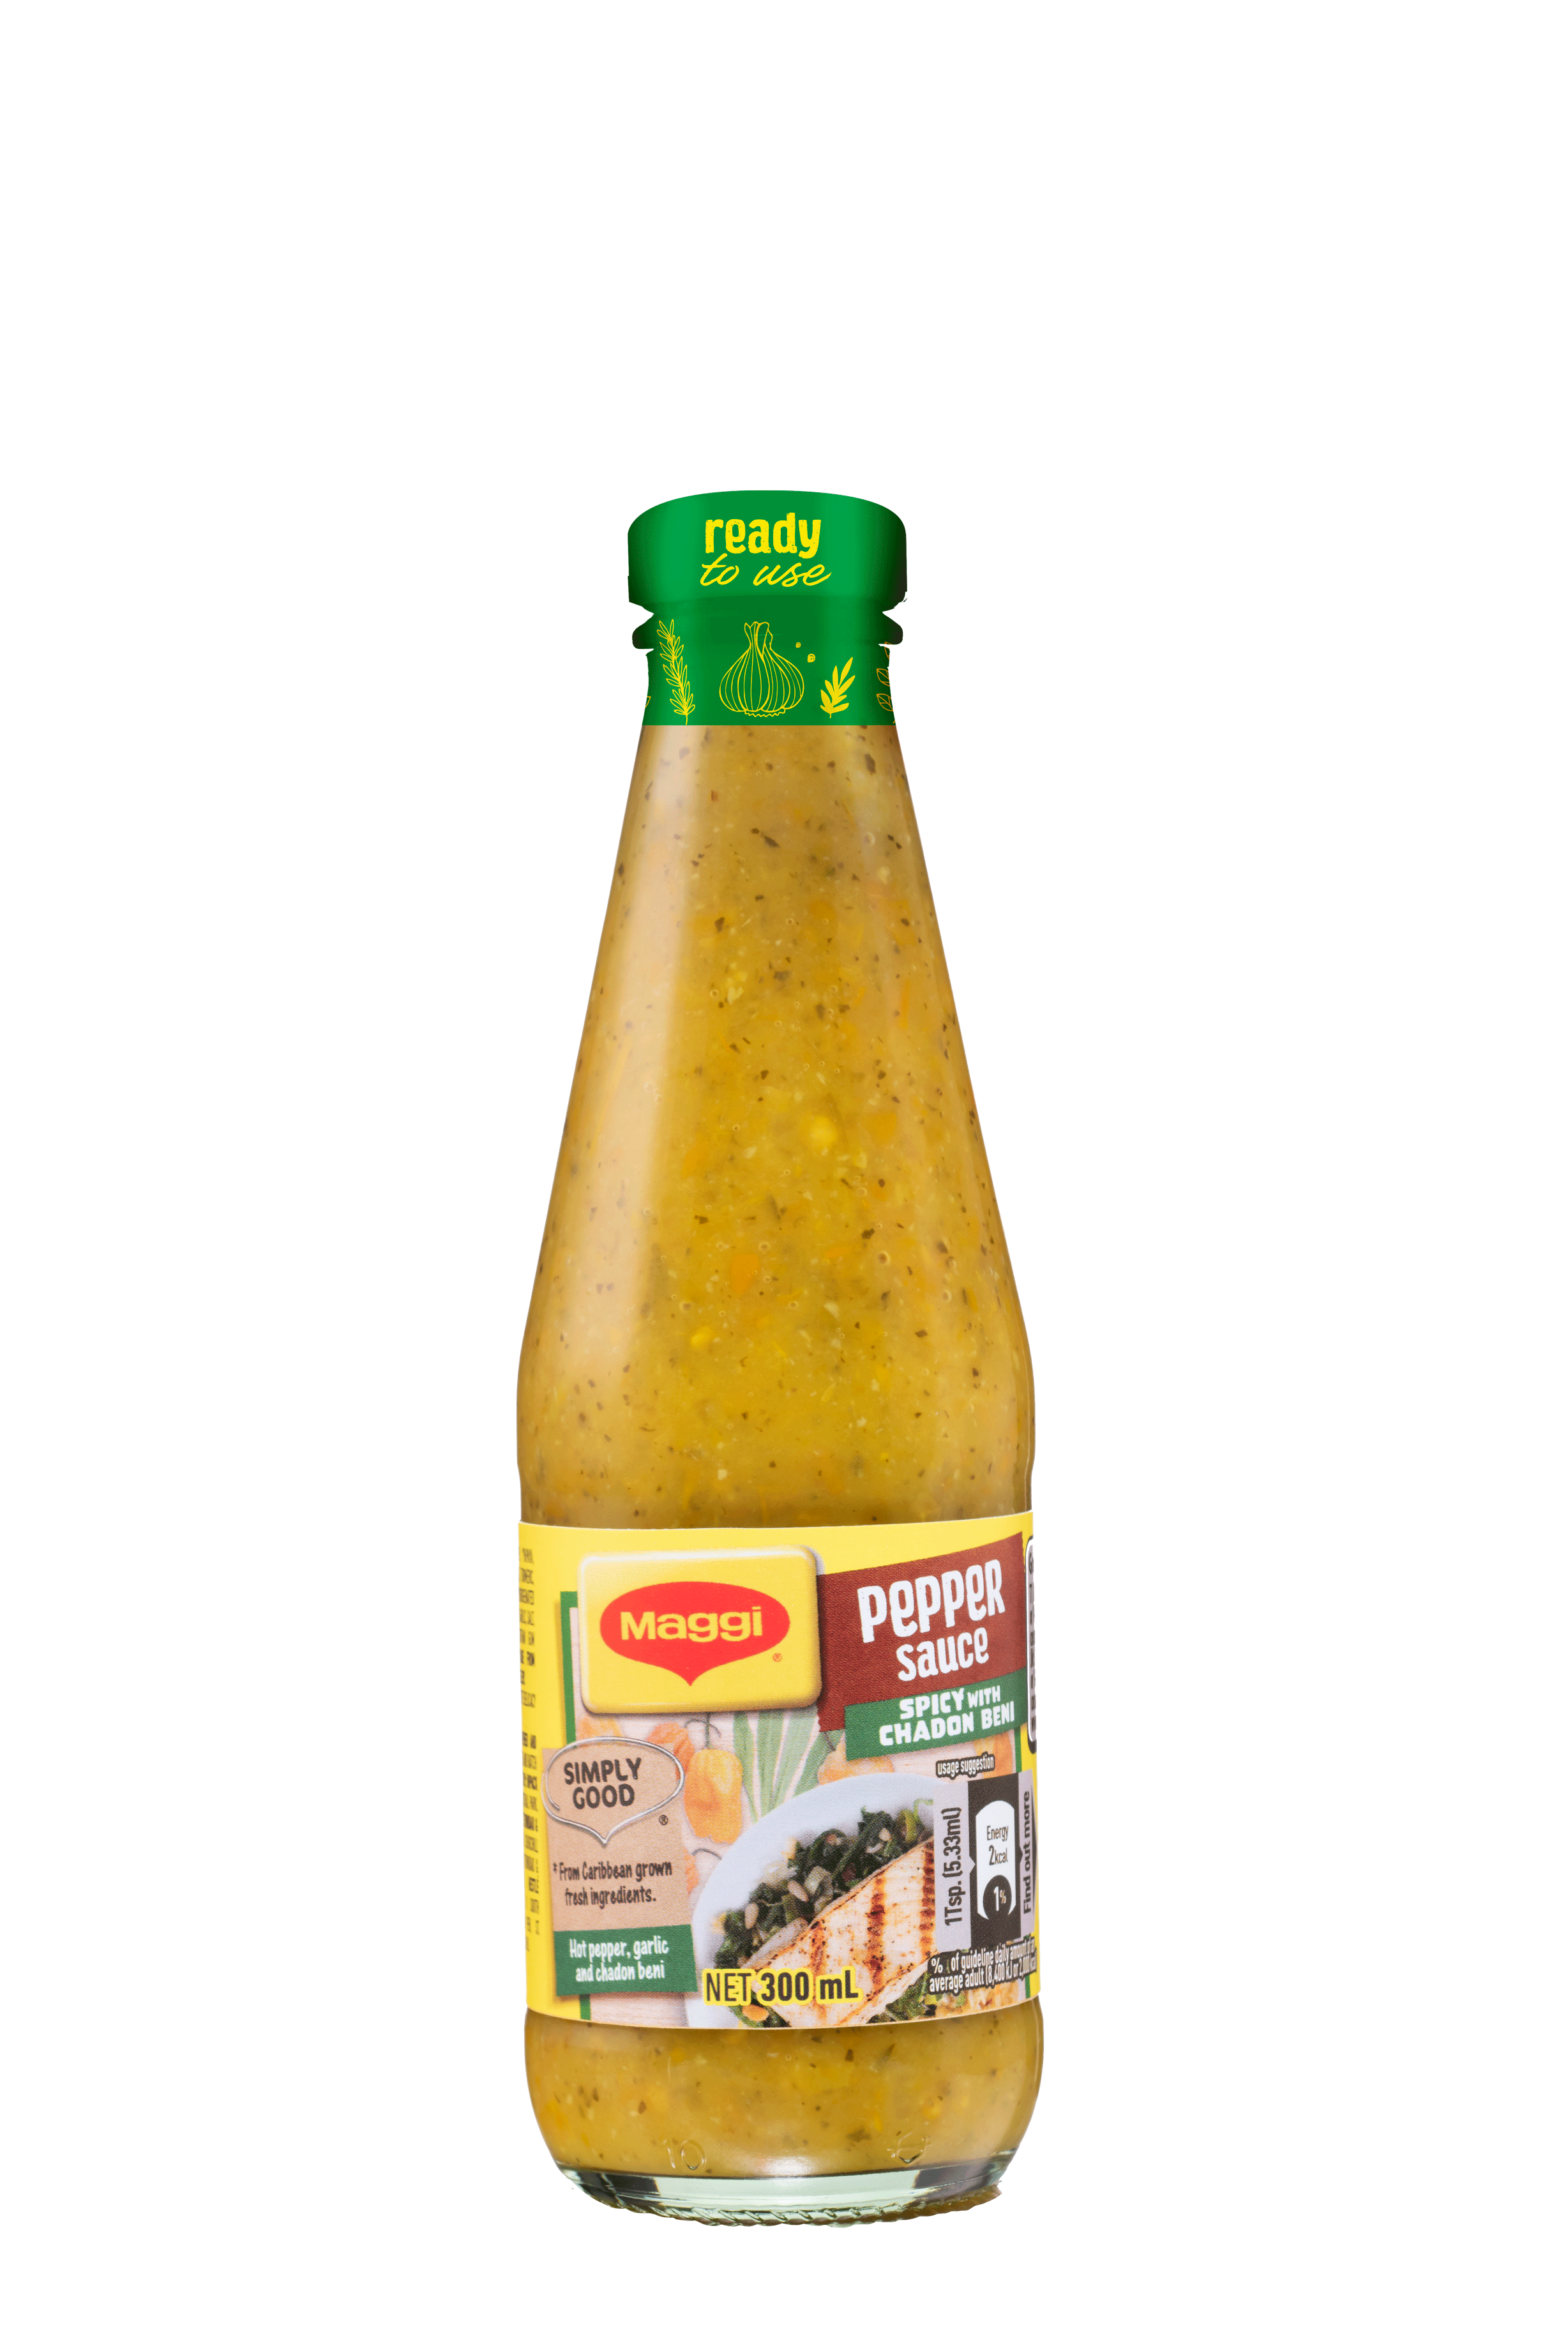 MAGGI® Pepper Sauce Chadon Beni